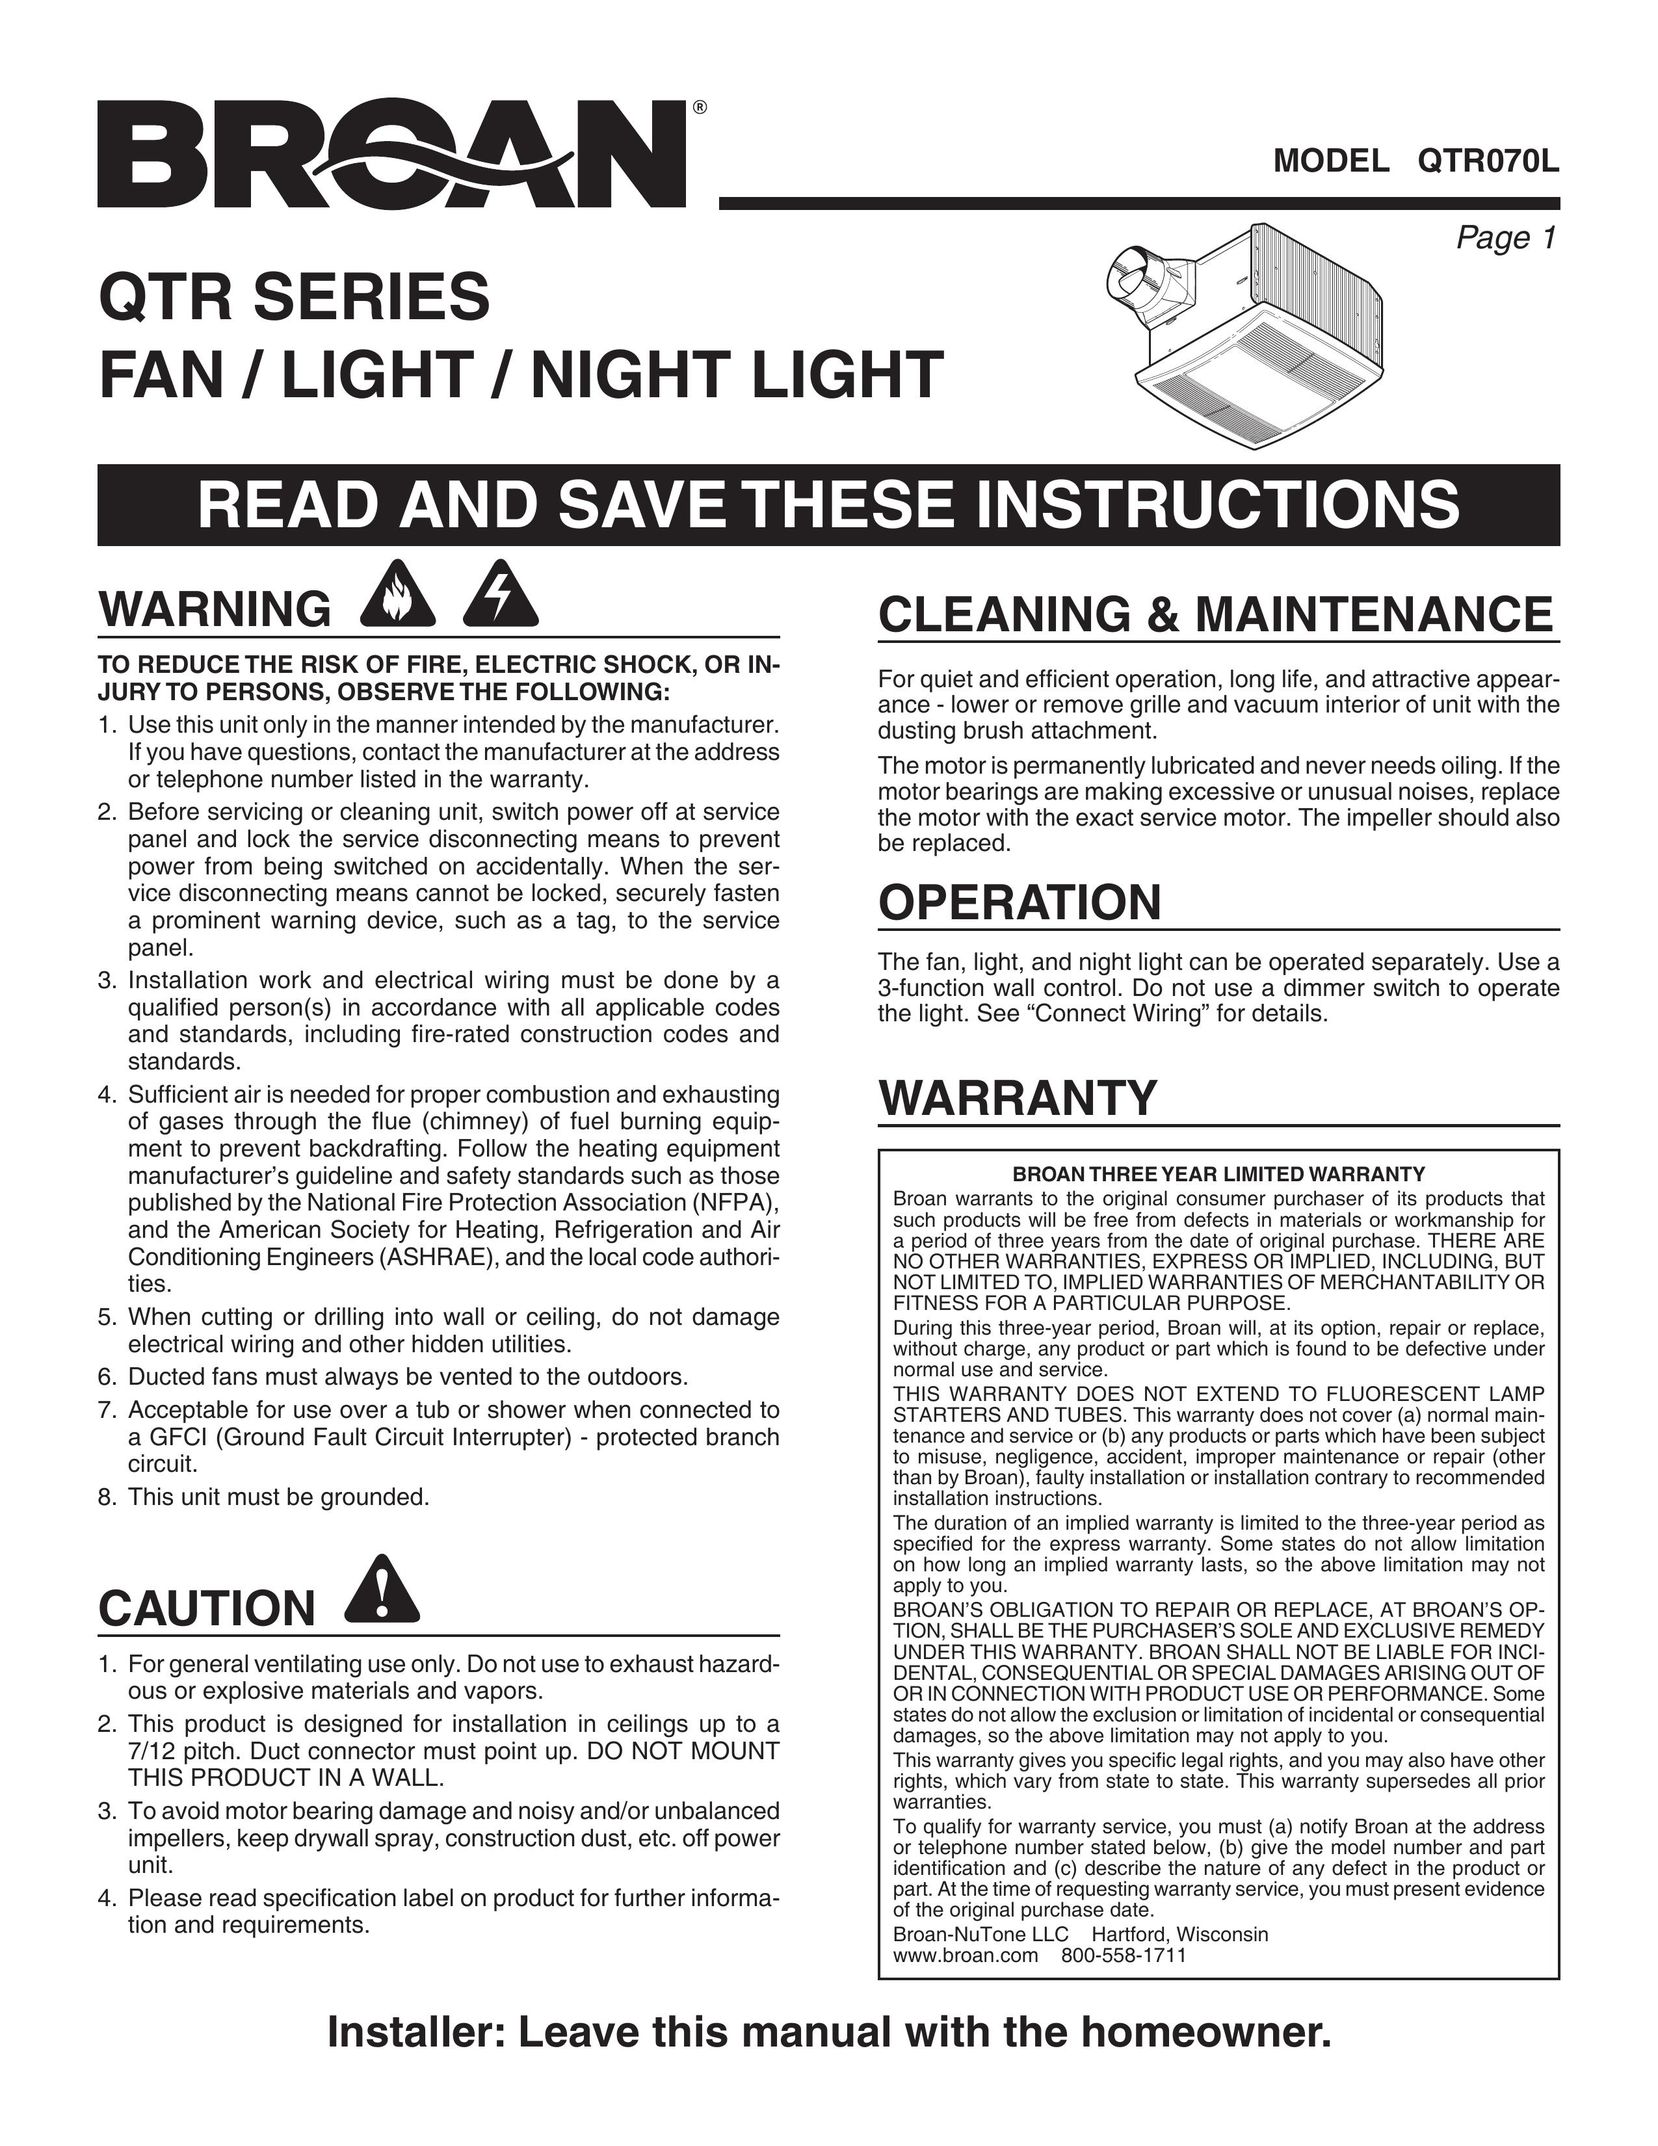 Broan QTR070L Indoor Furnishings User Manual